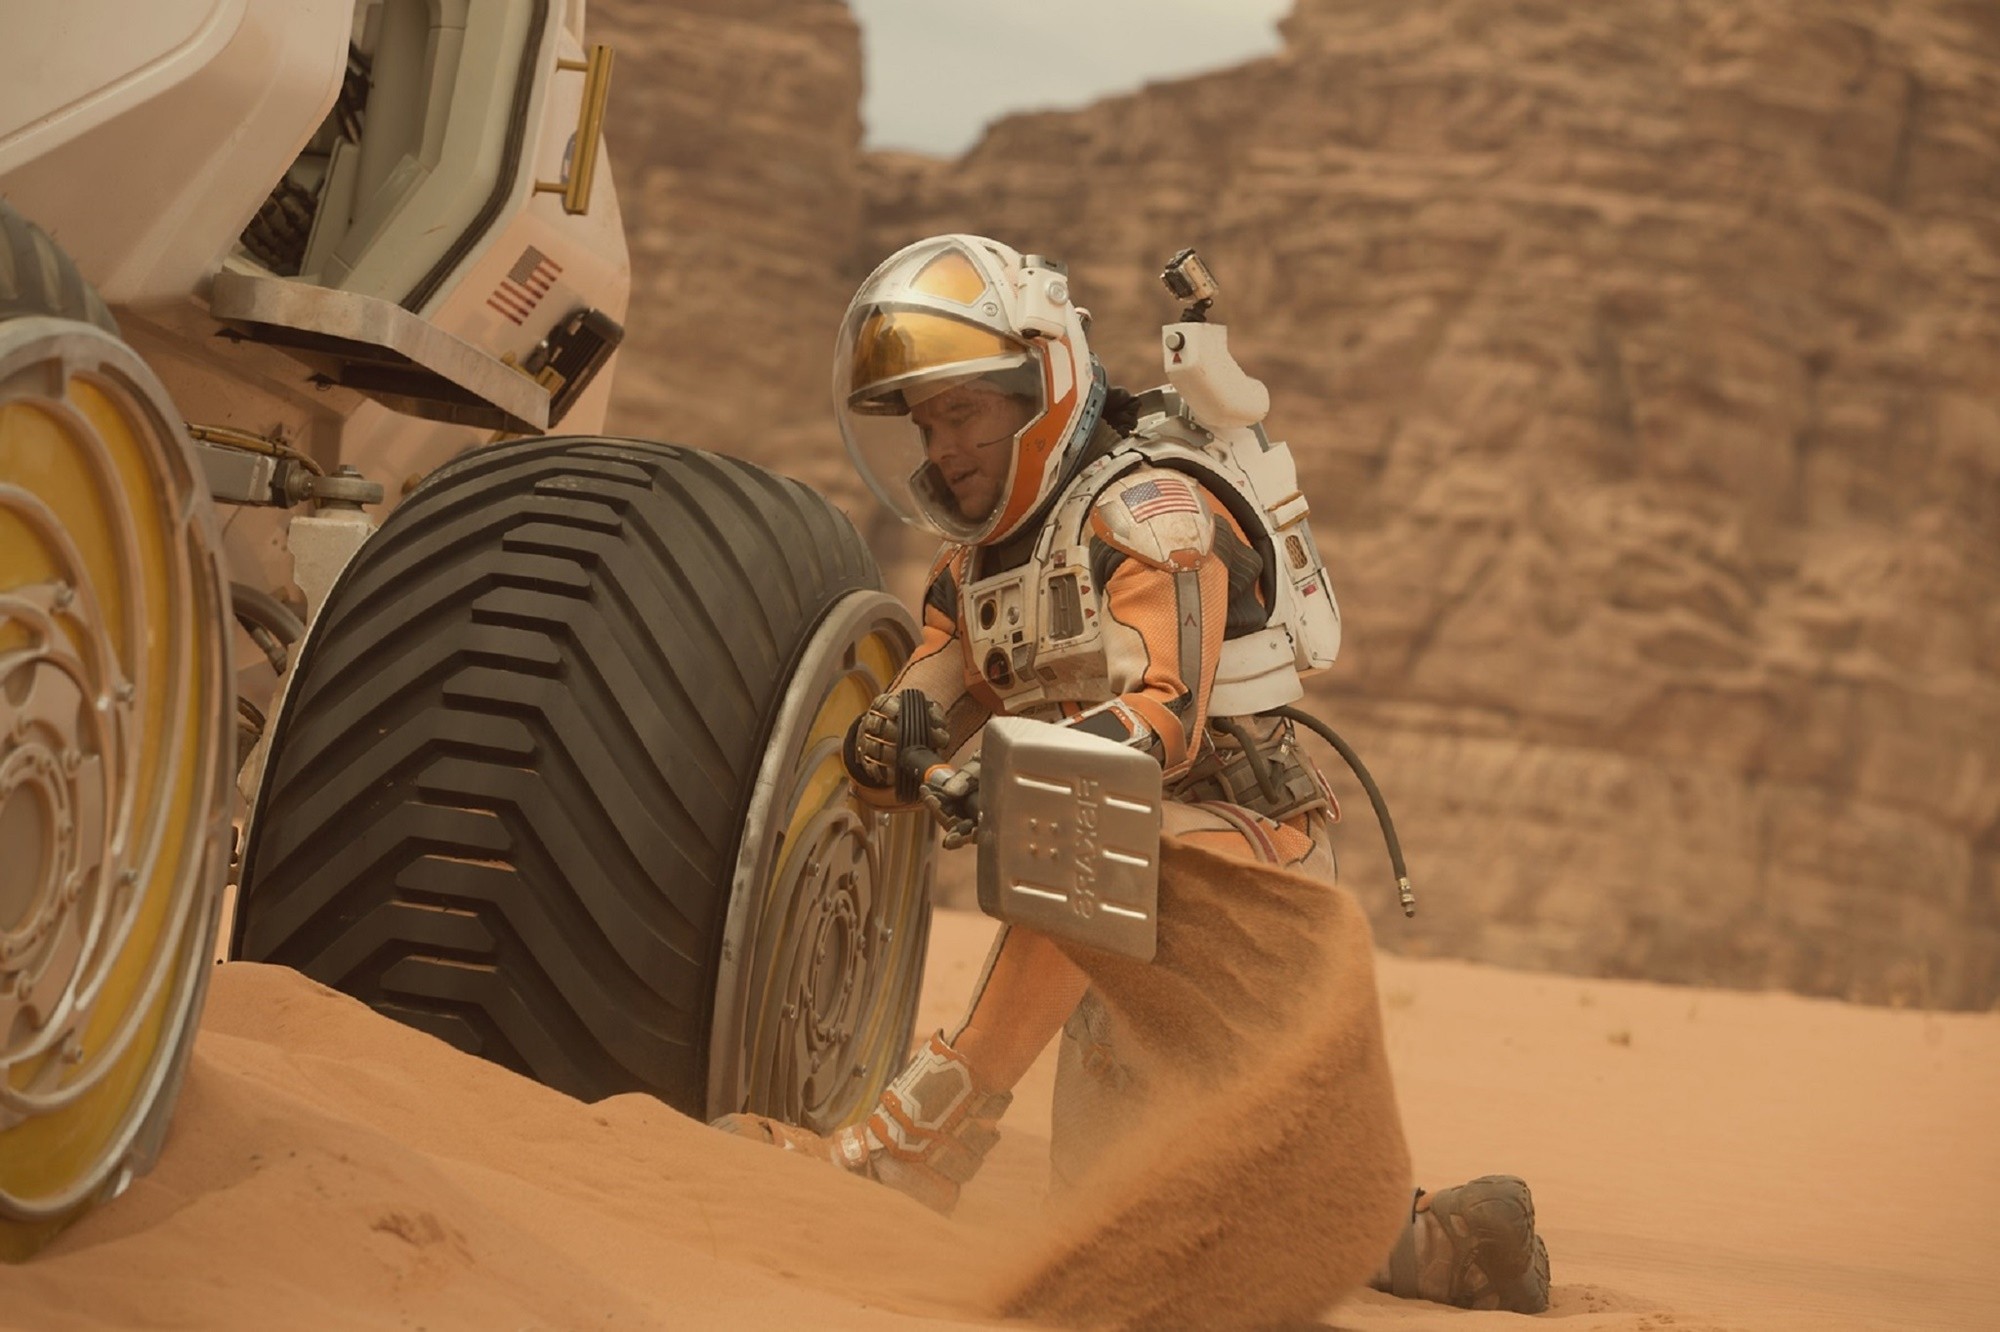 Matt Damon stars as Mark Watney in 20th Century Fox's The Martian (2015)